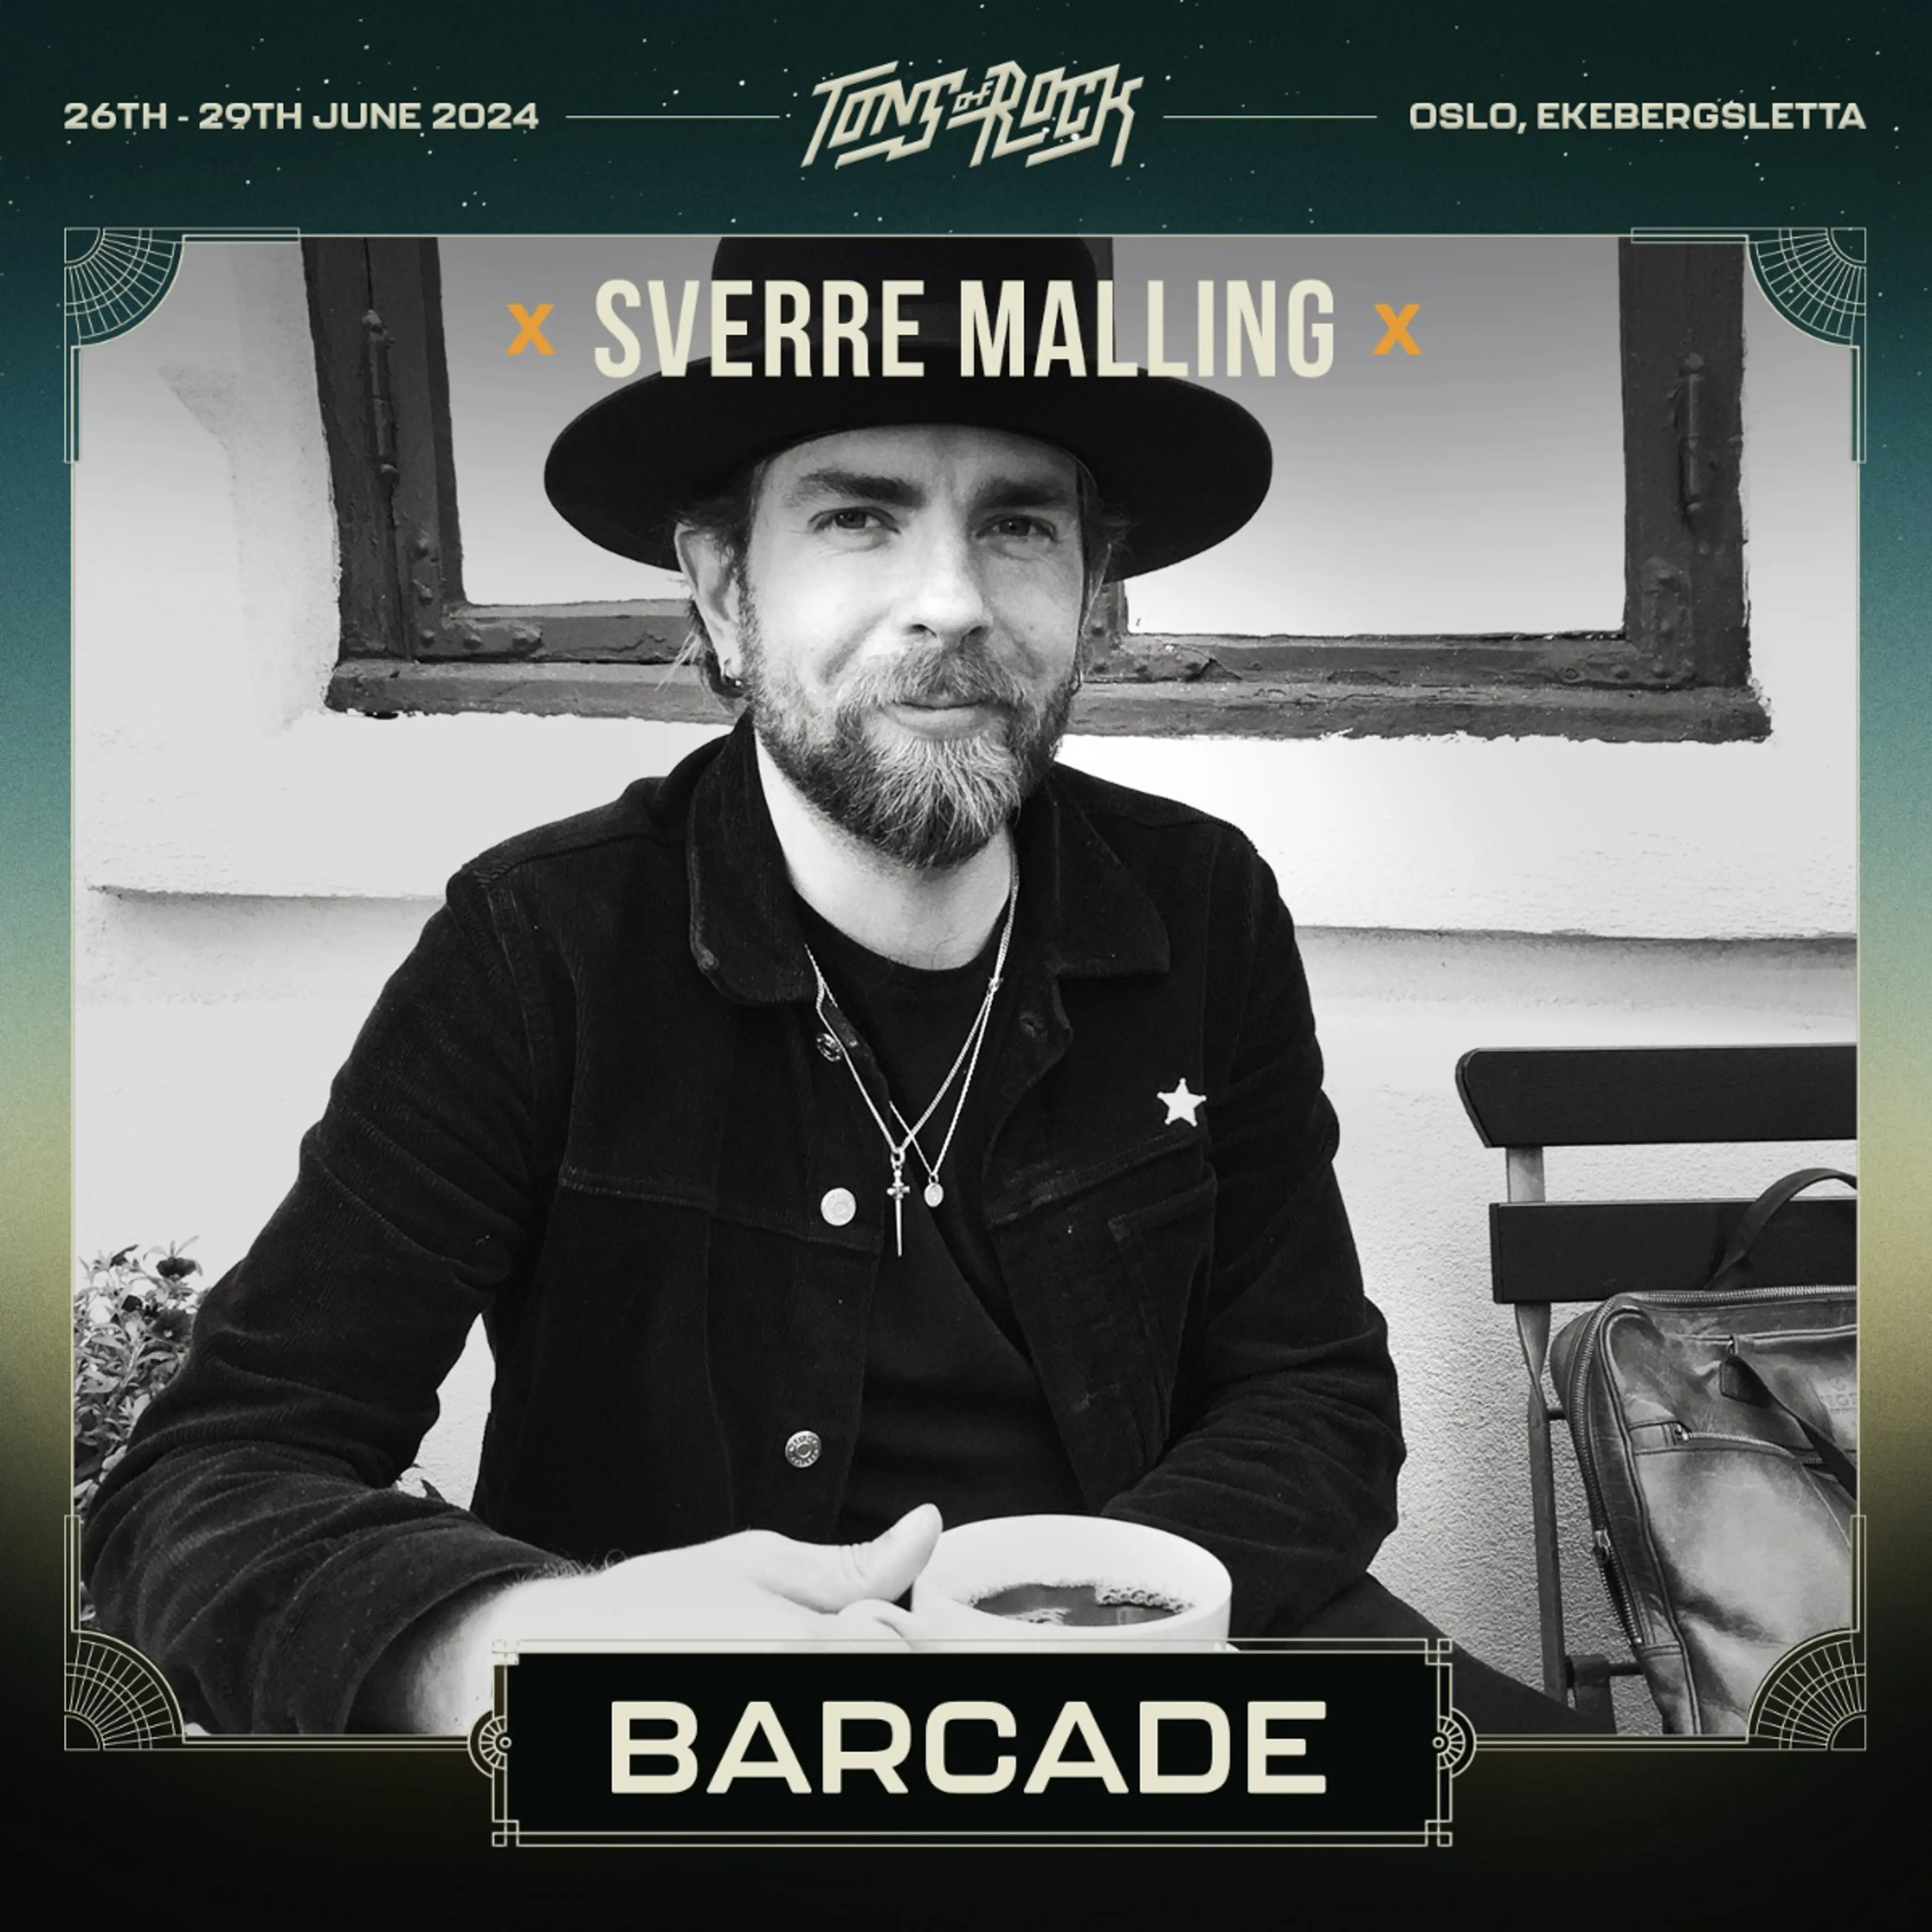 Sverre Malling this years festival artist